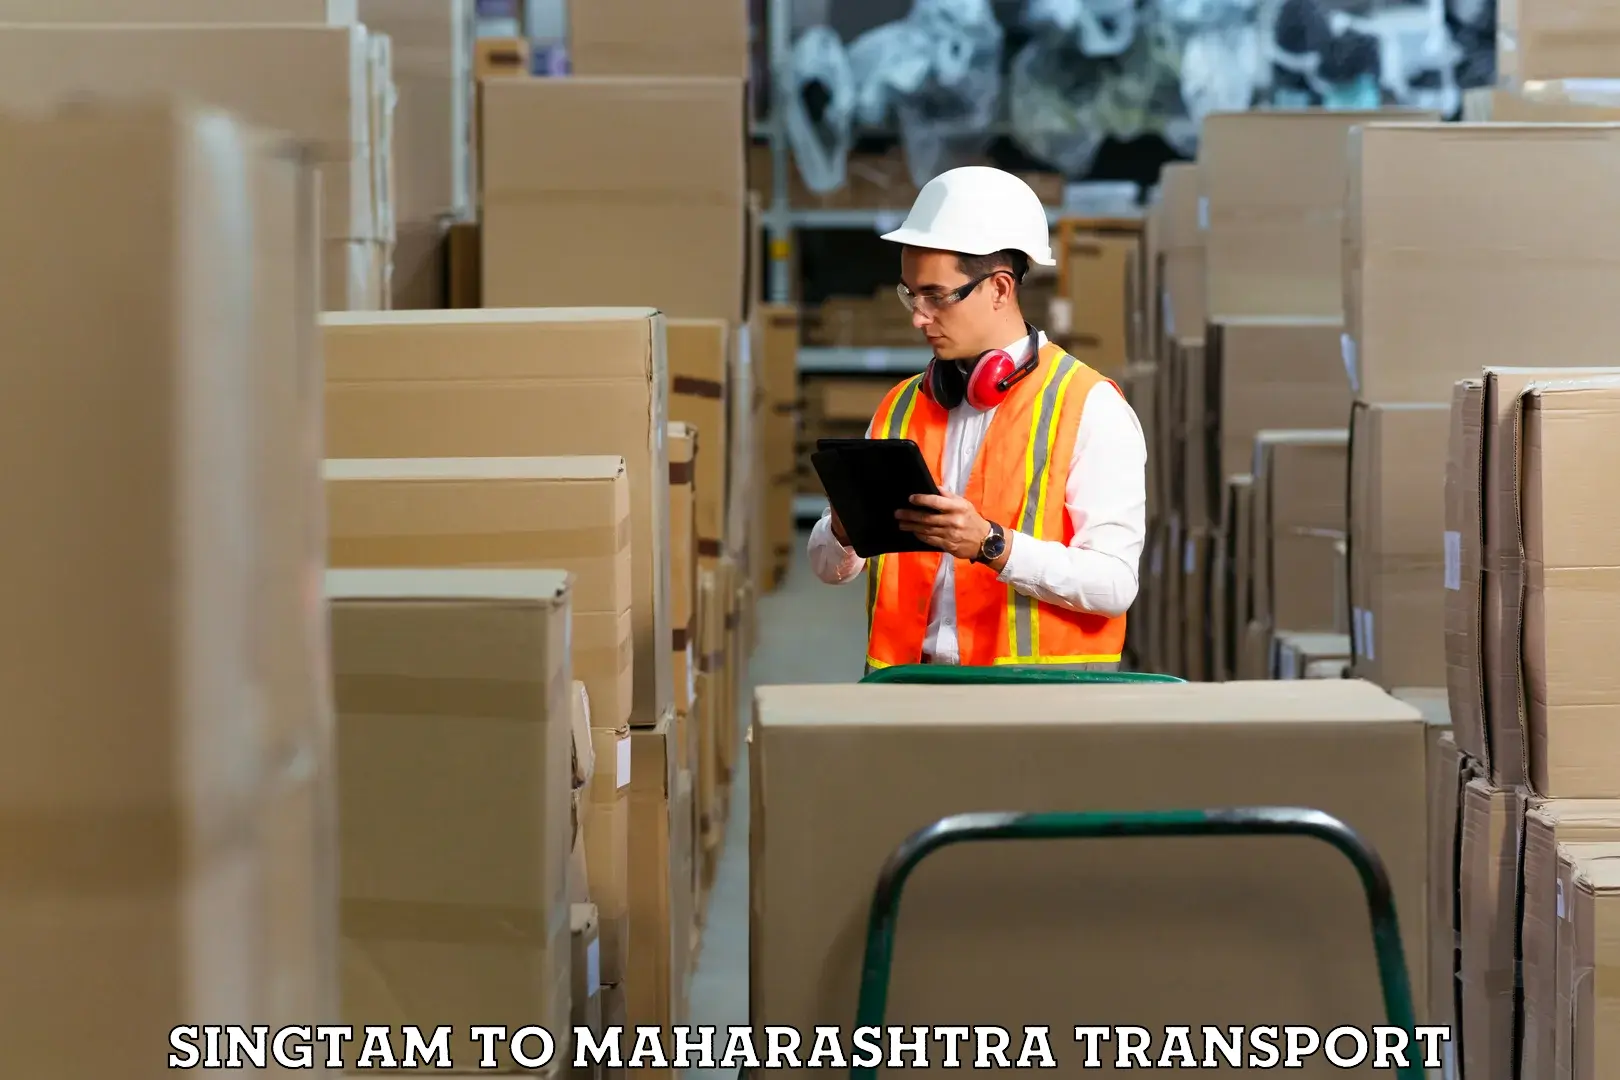 Container transport service Singtam to Pandharpur